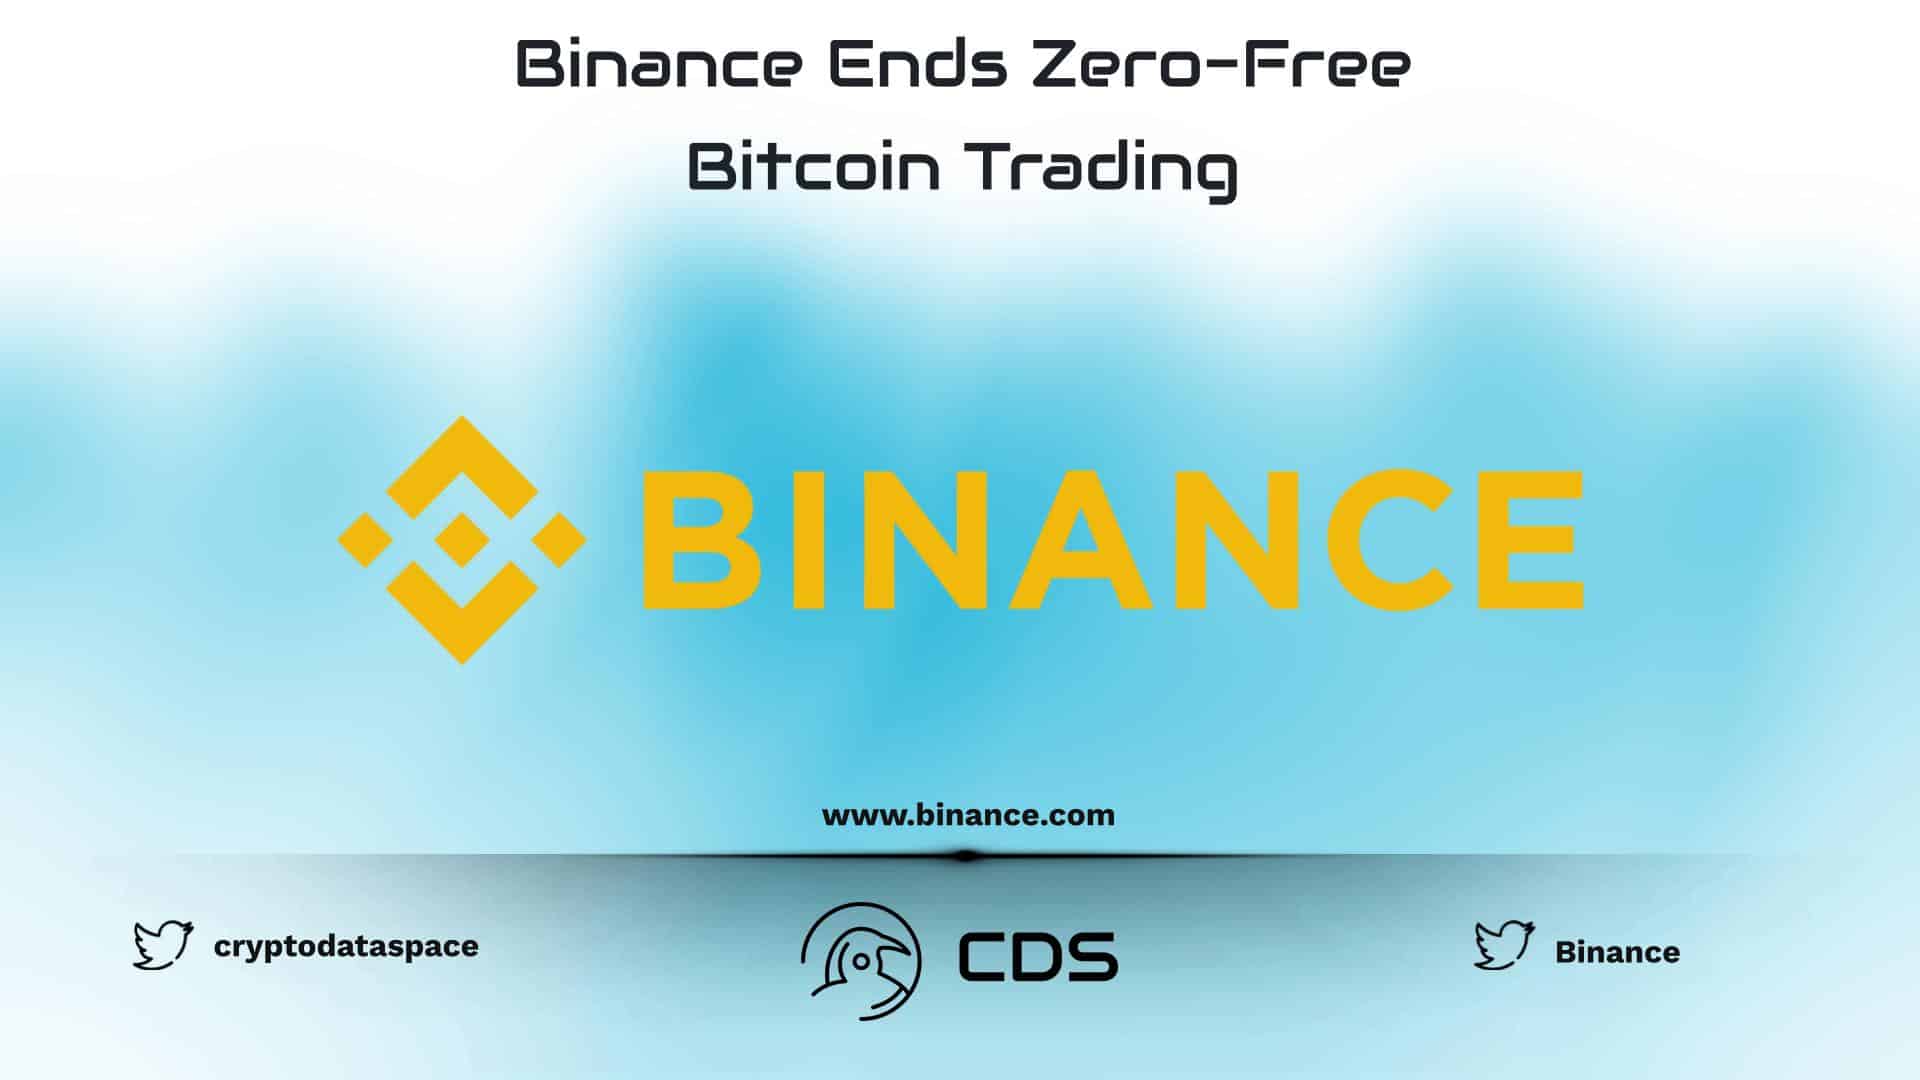 Binance Ends Zero-Free Bitcoin Trading